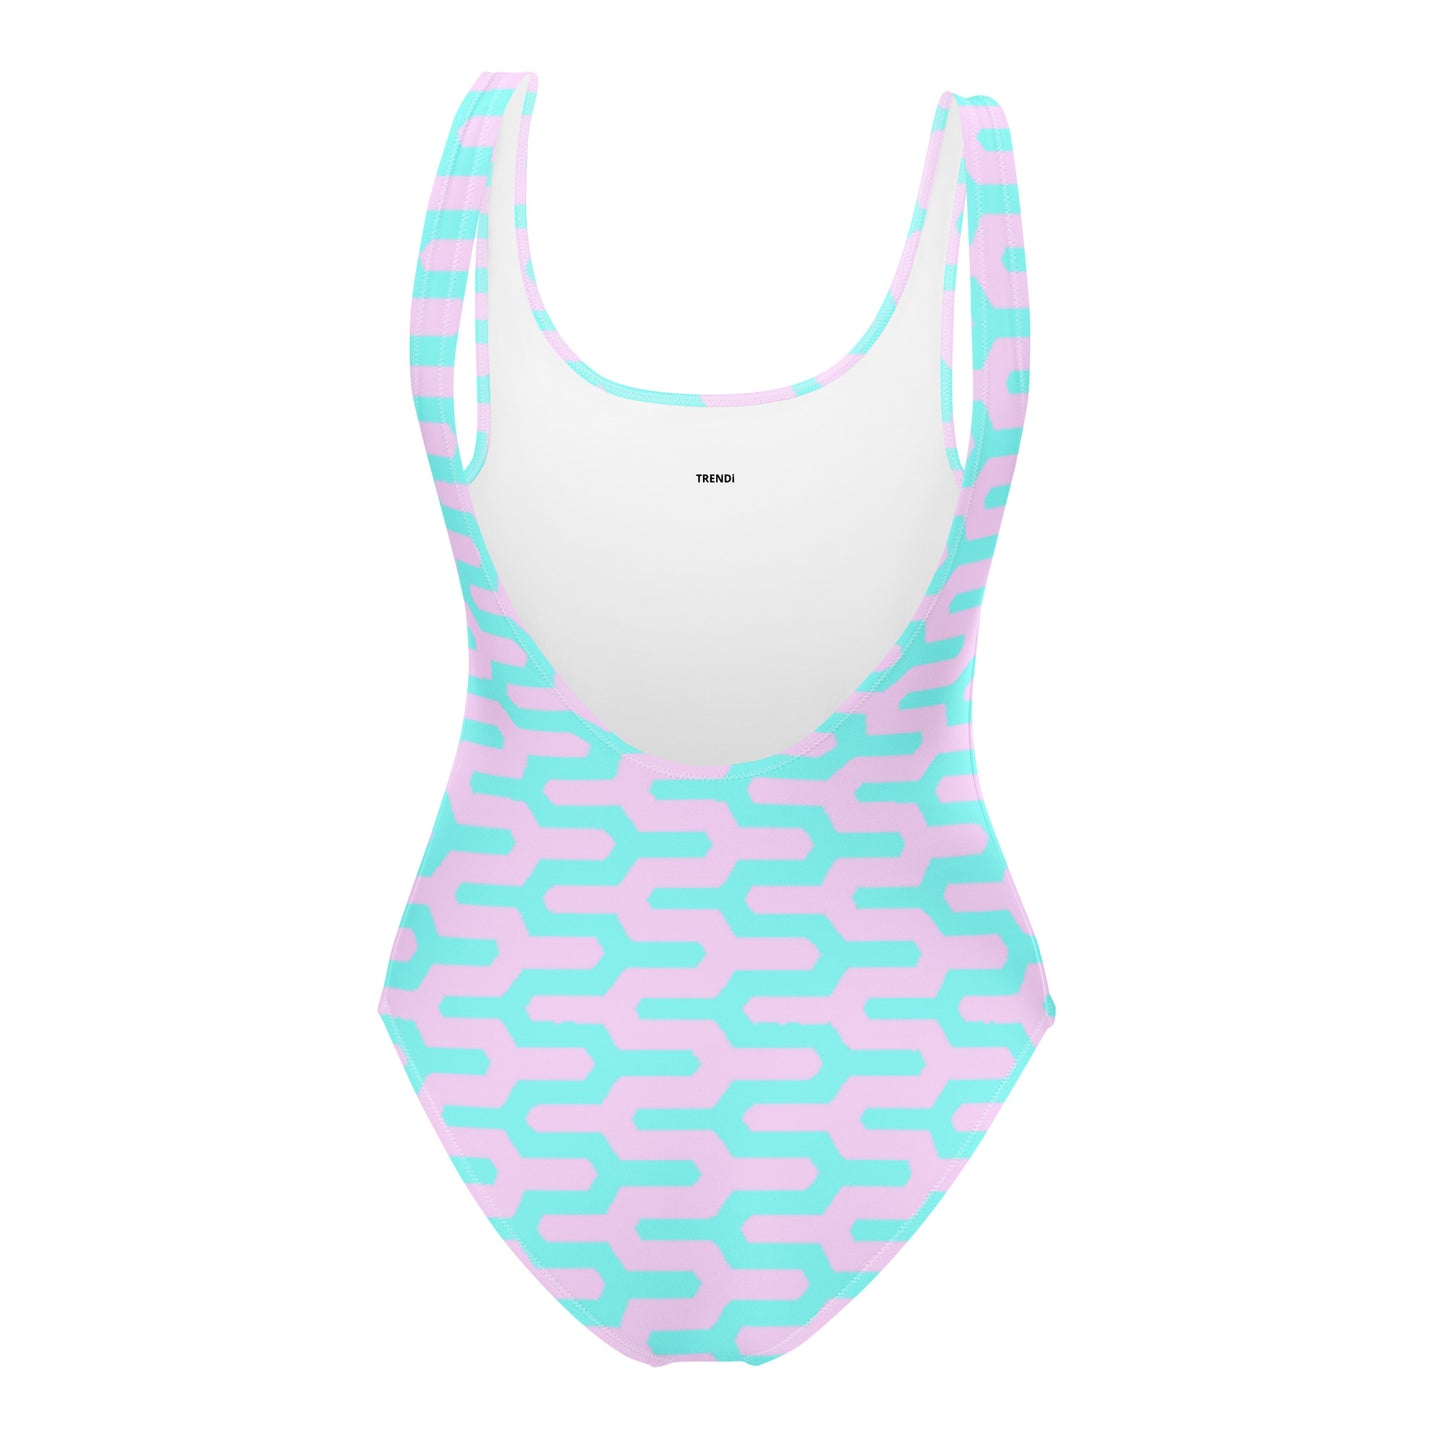 Pink & Blue Wavy Pattern One-Piece Swimsuit